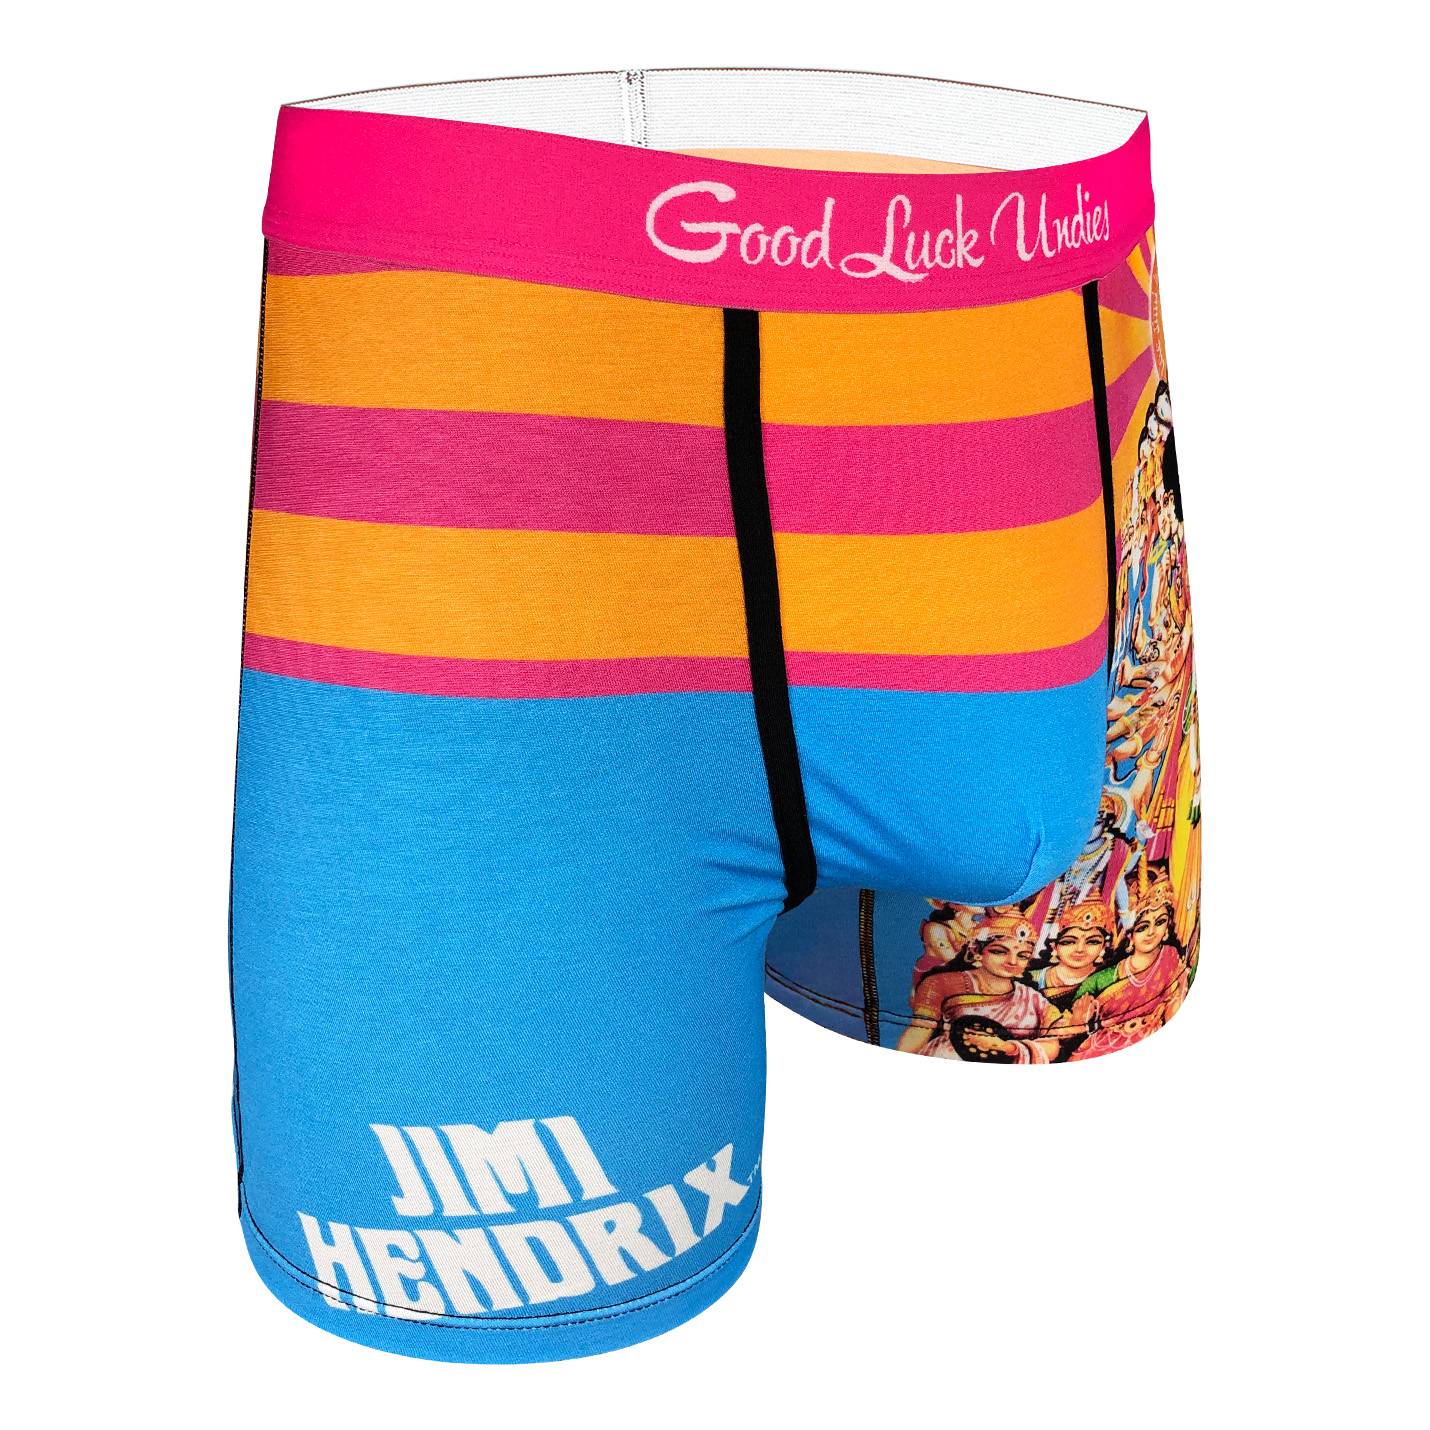 Underwear Suggestion: Jimmy Trendy – Colorful Brief